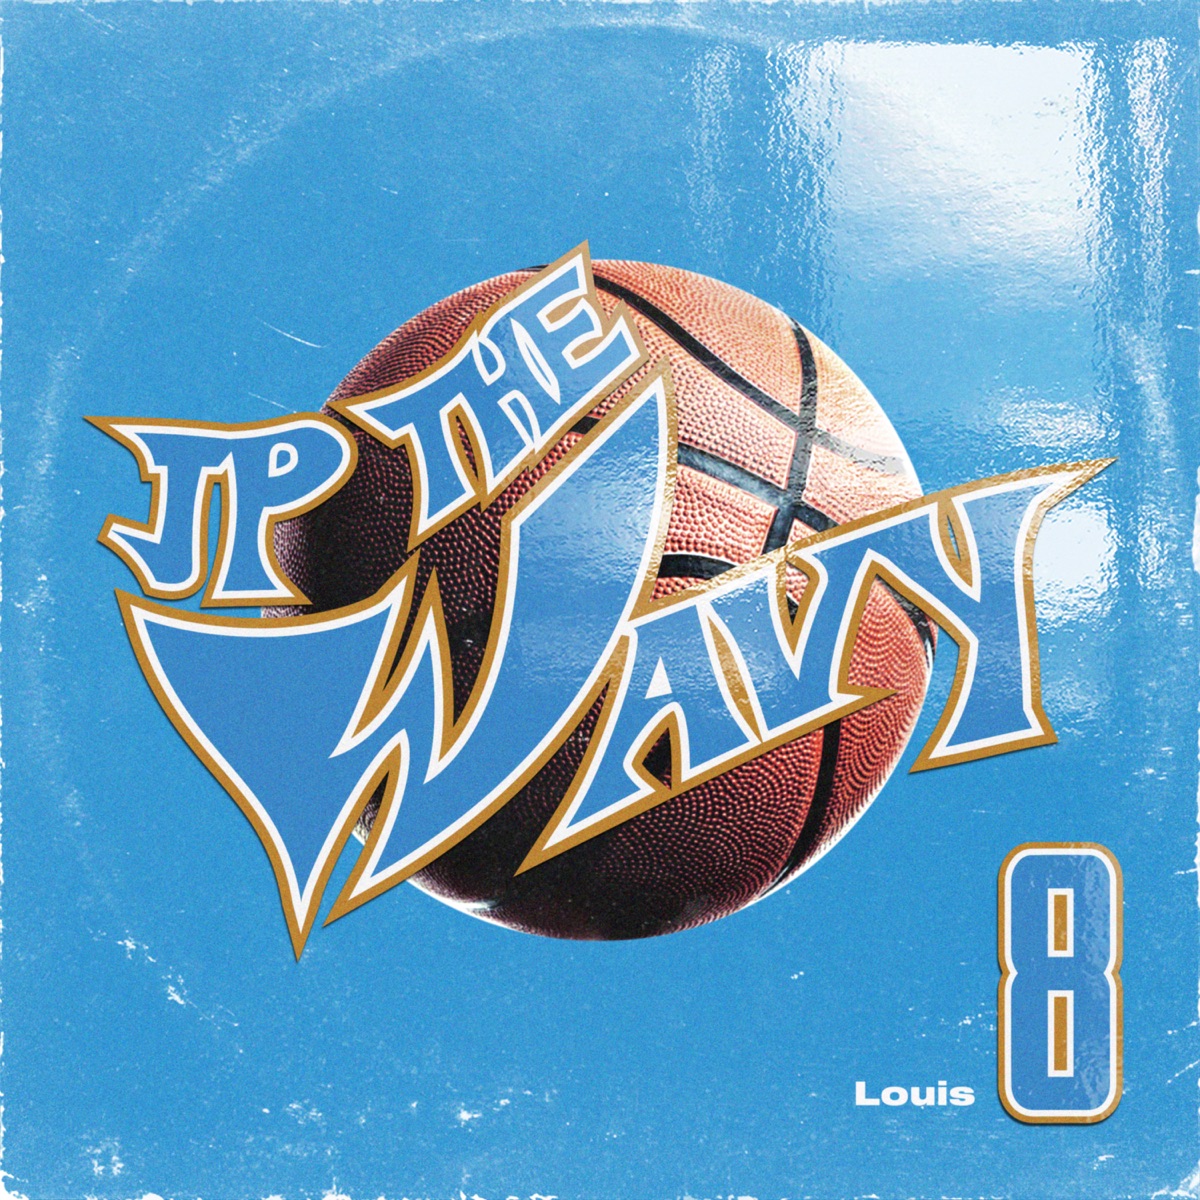 『JP THE WAVY - Louis 8』収録の『Louis 8』ジャケット